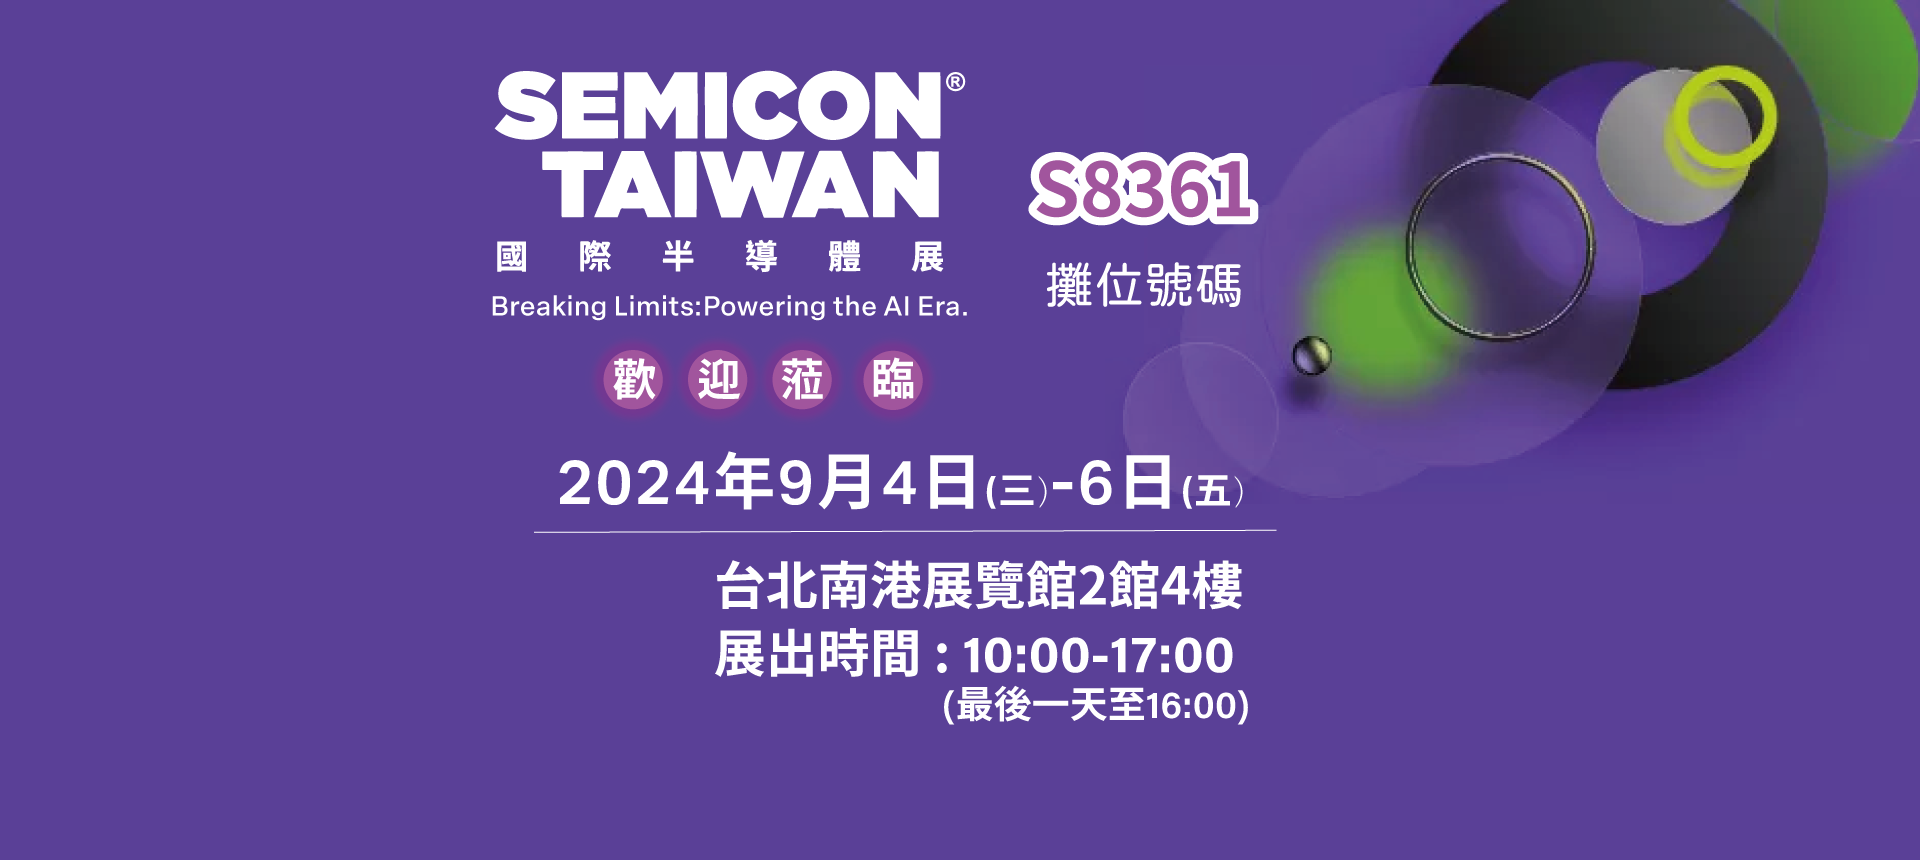 2024SEMICON-banner